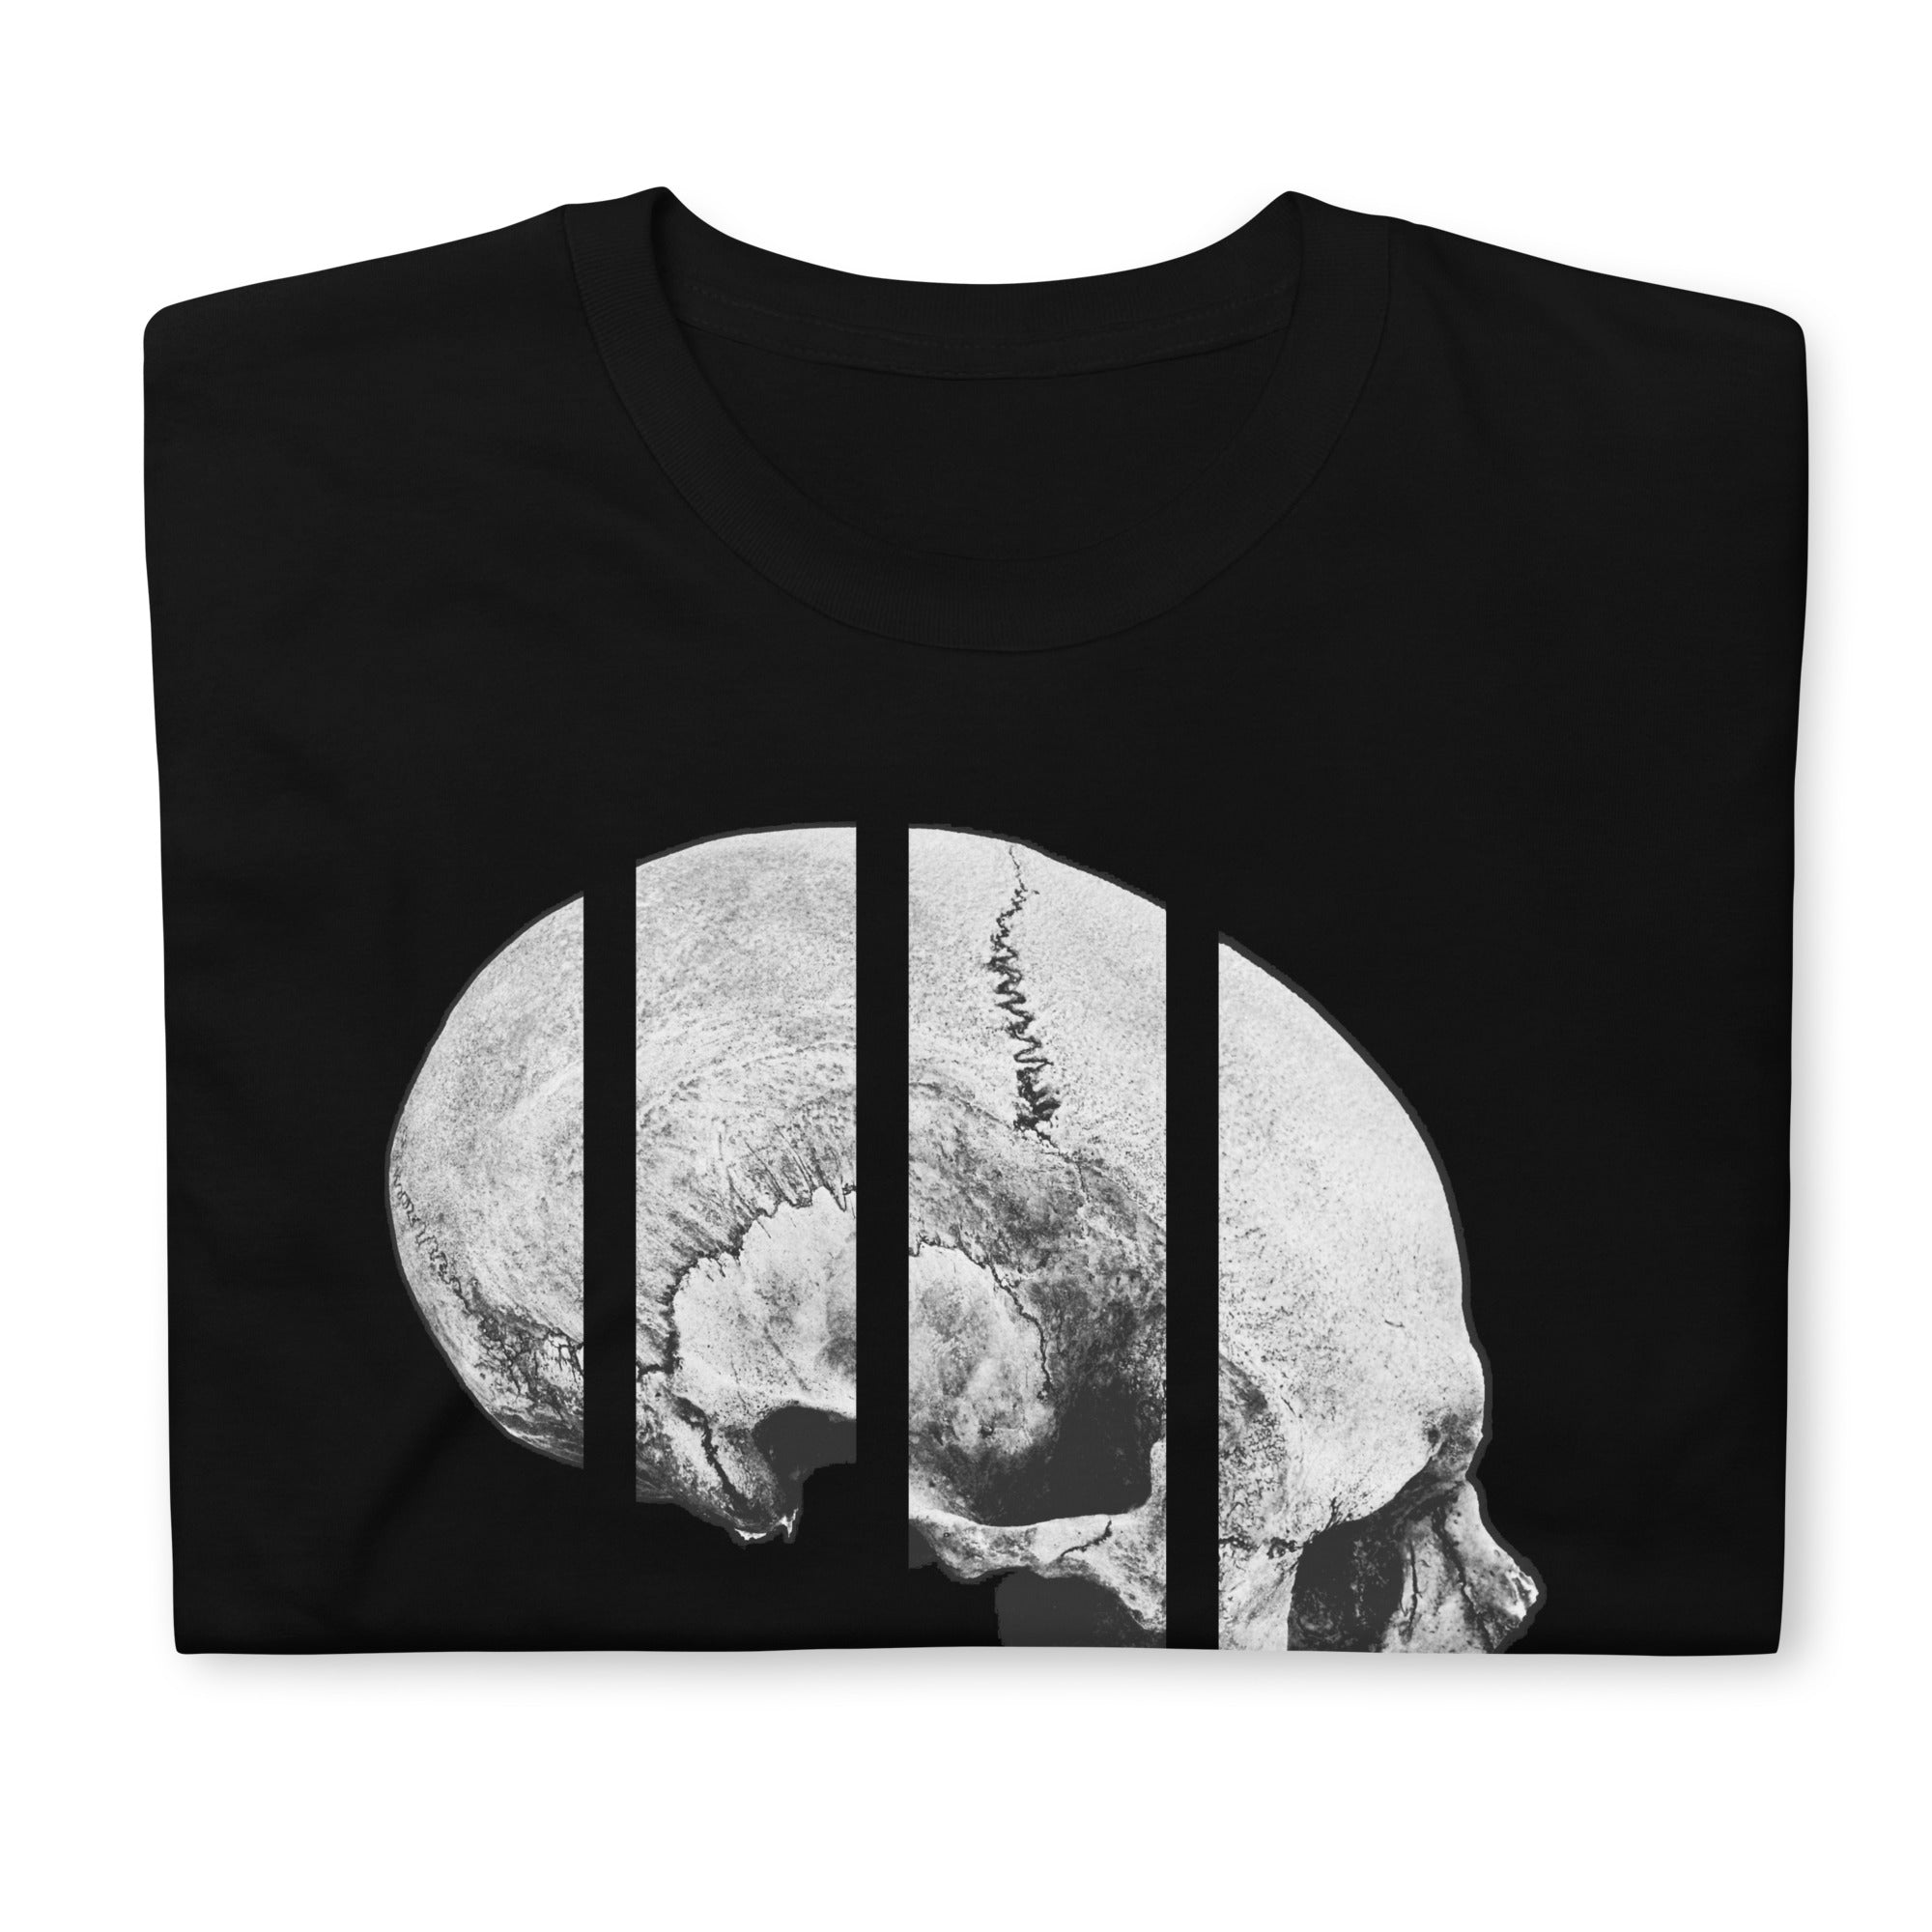 Exploded Elongated Human Skull Men's Short Sleeve T-Shirt - Edge of Life Designs